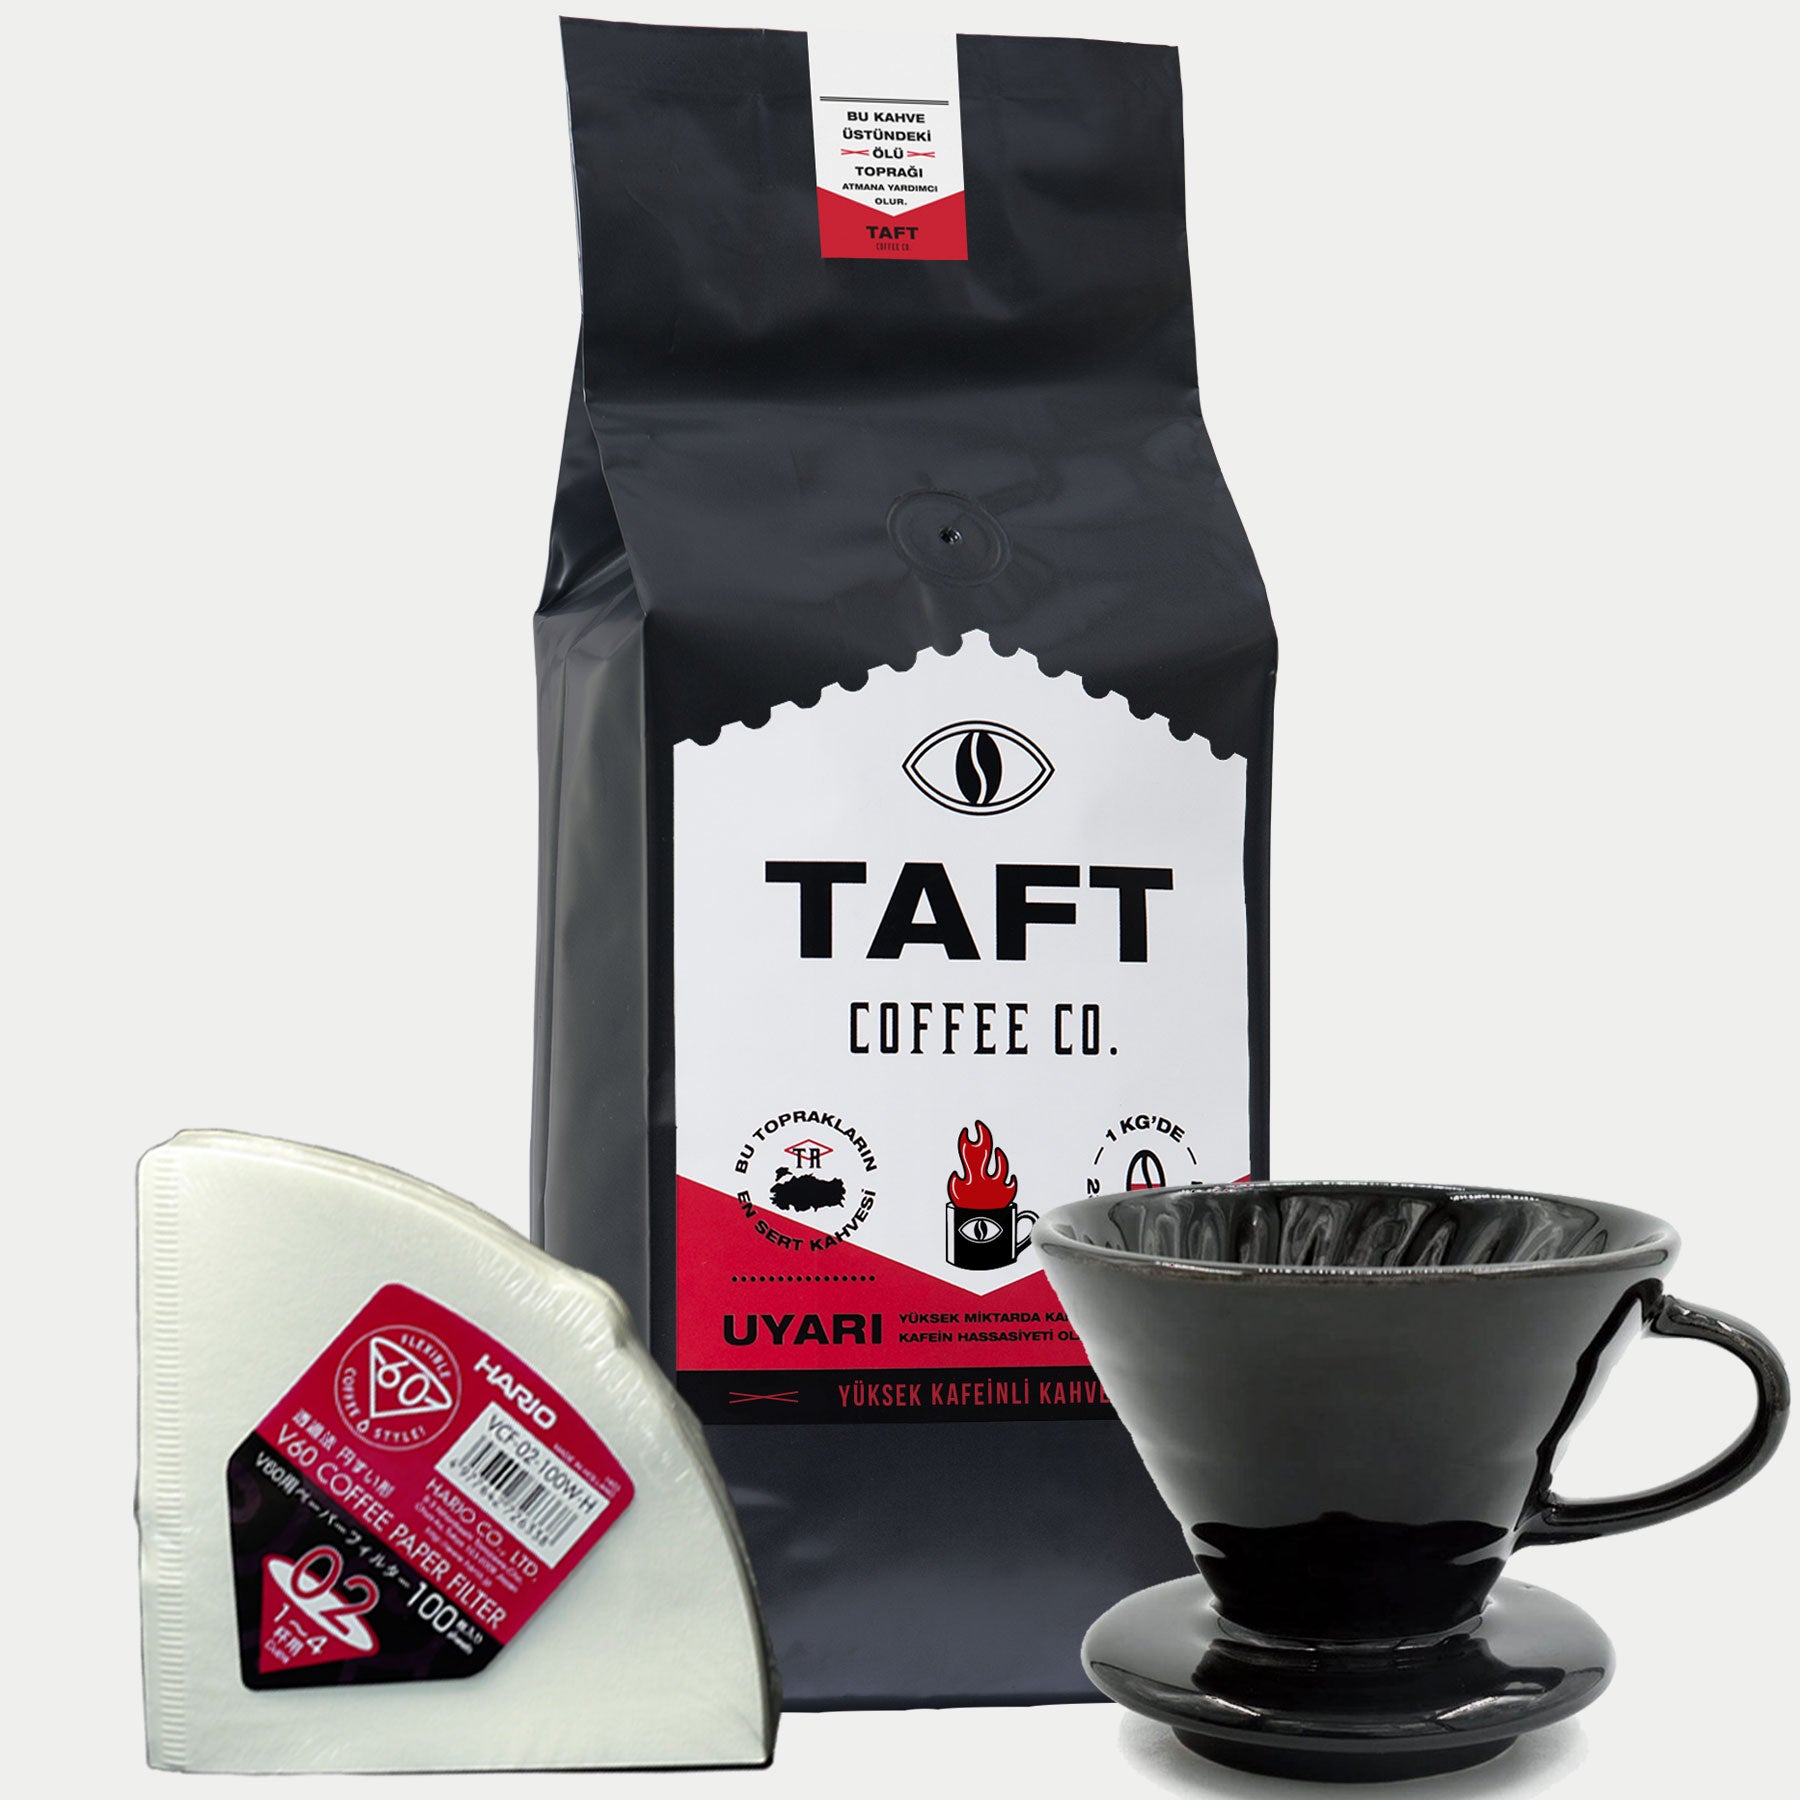 TAFT Coffee Yüksek Kafeinli siyah v60 Filtre Kahve Seti 500gr